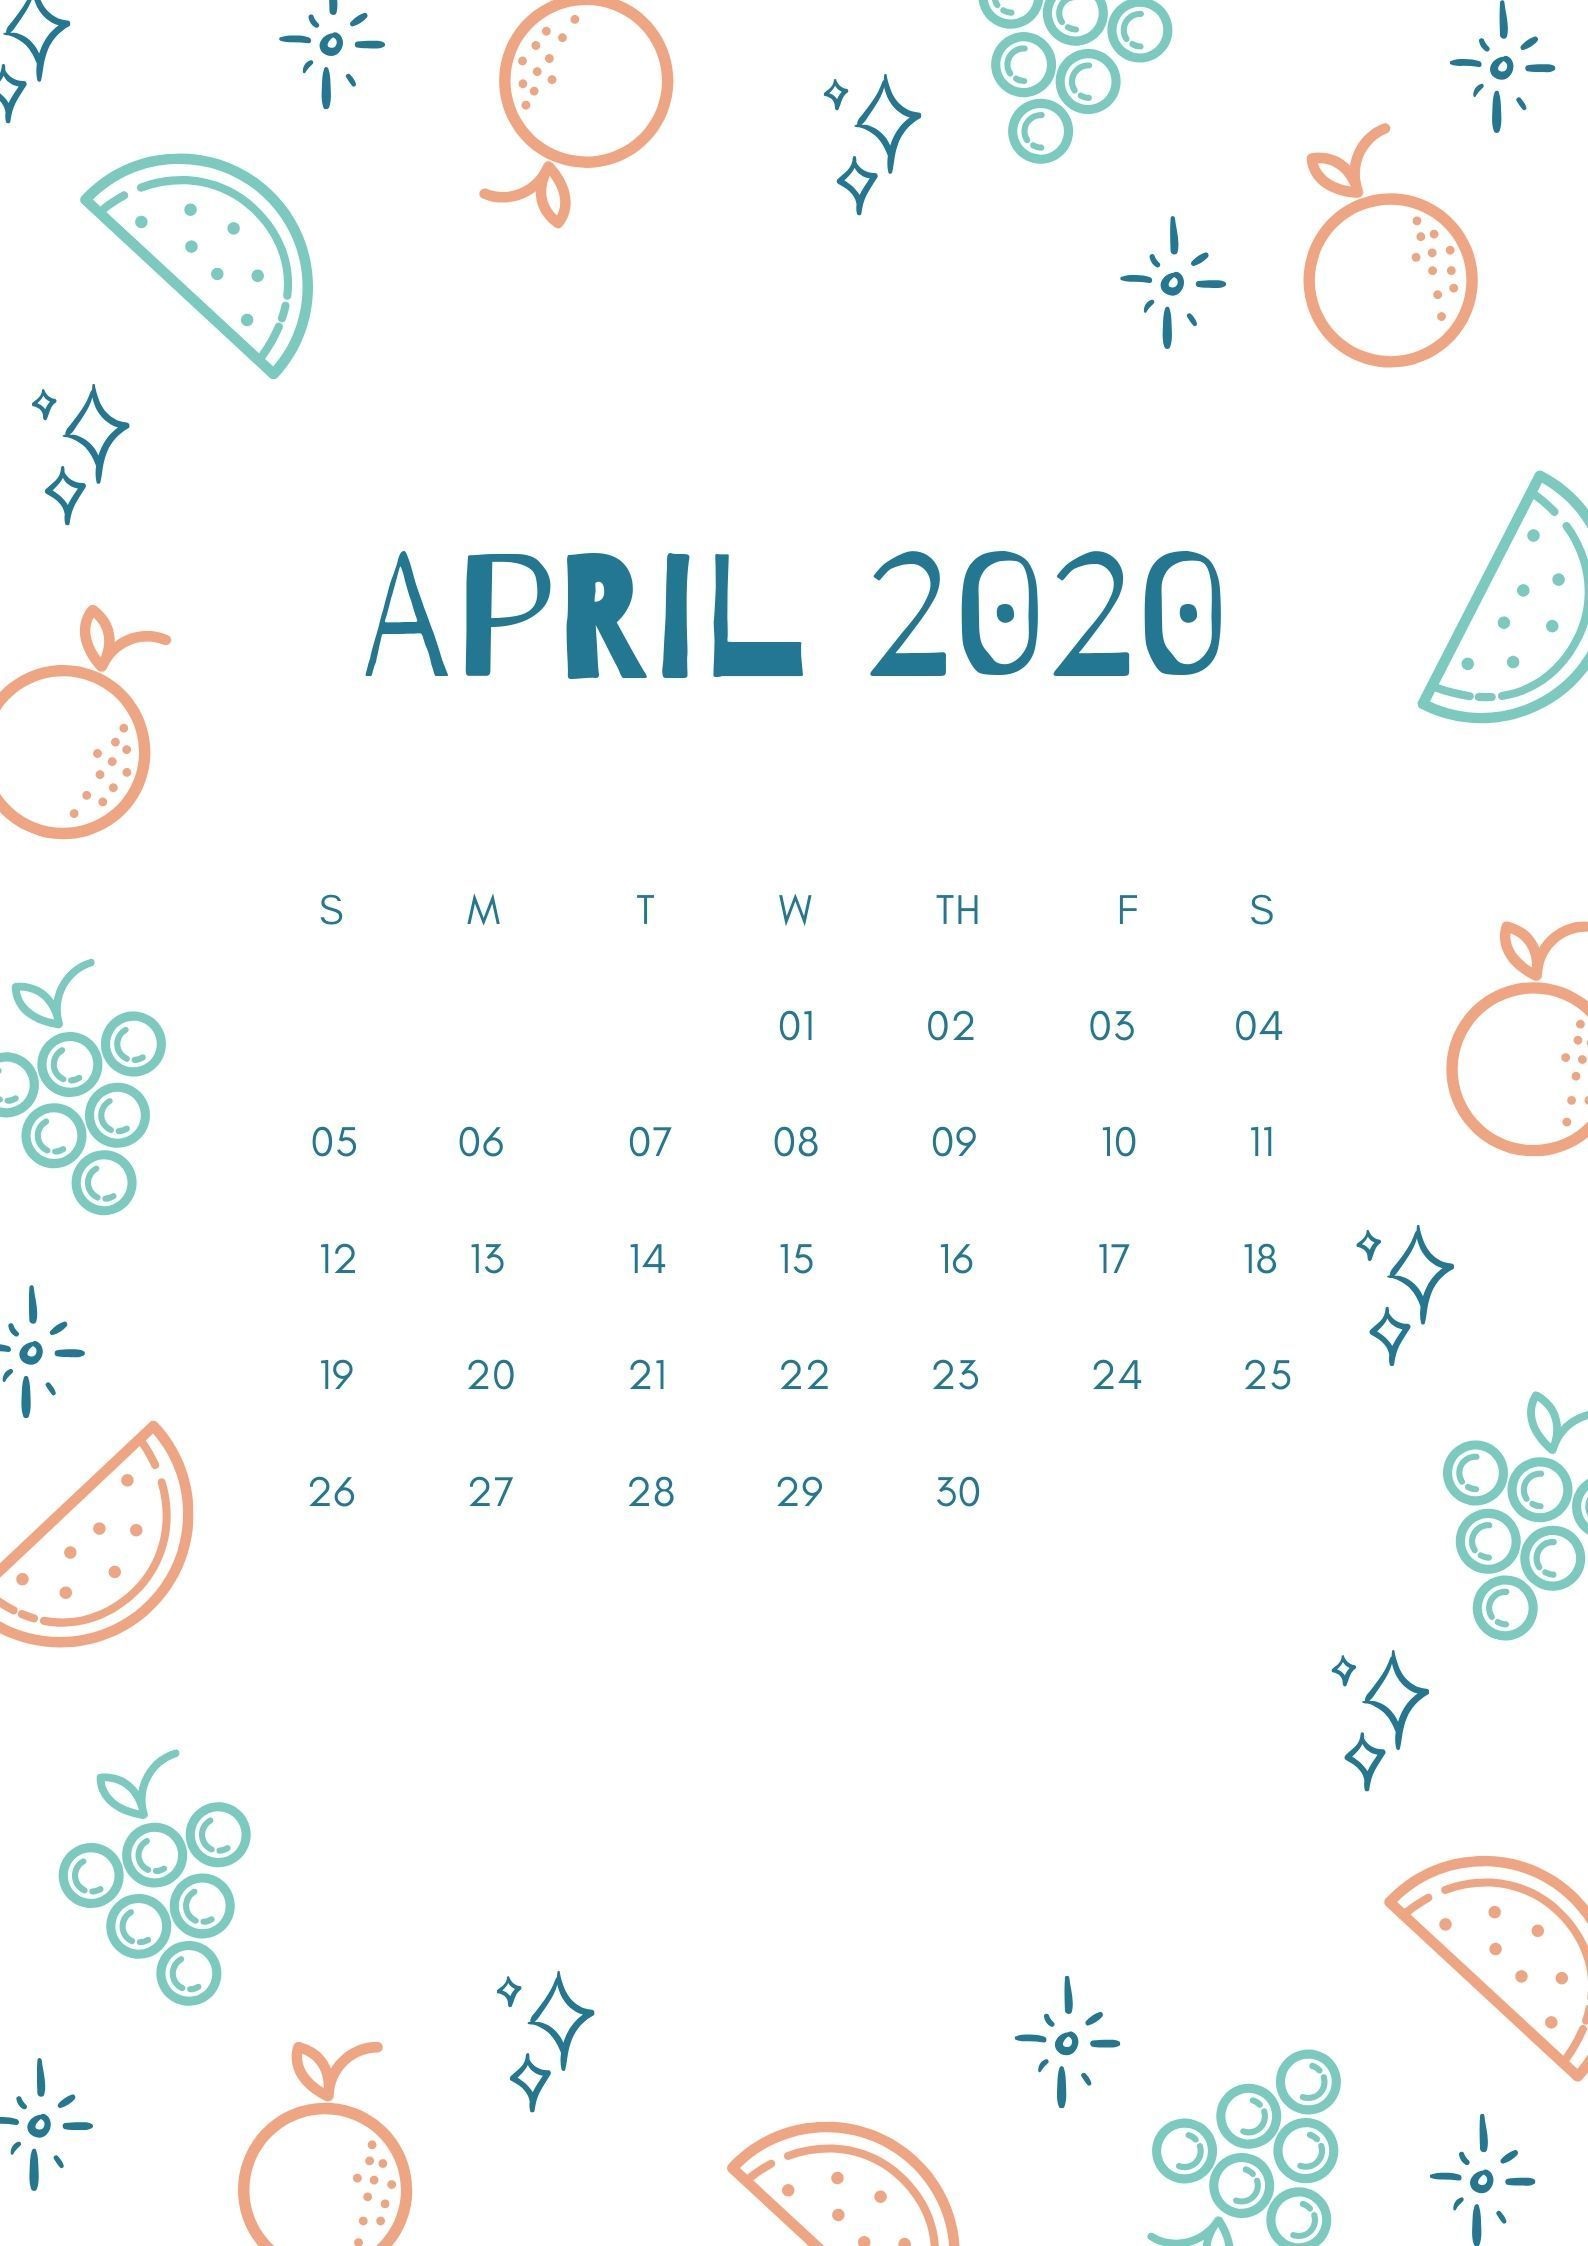 April 2020 Calendar iPhone Wallpaper